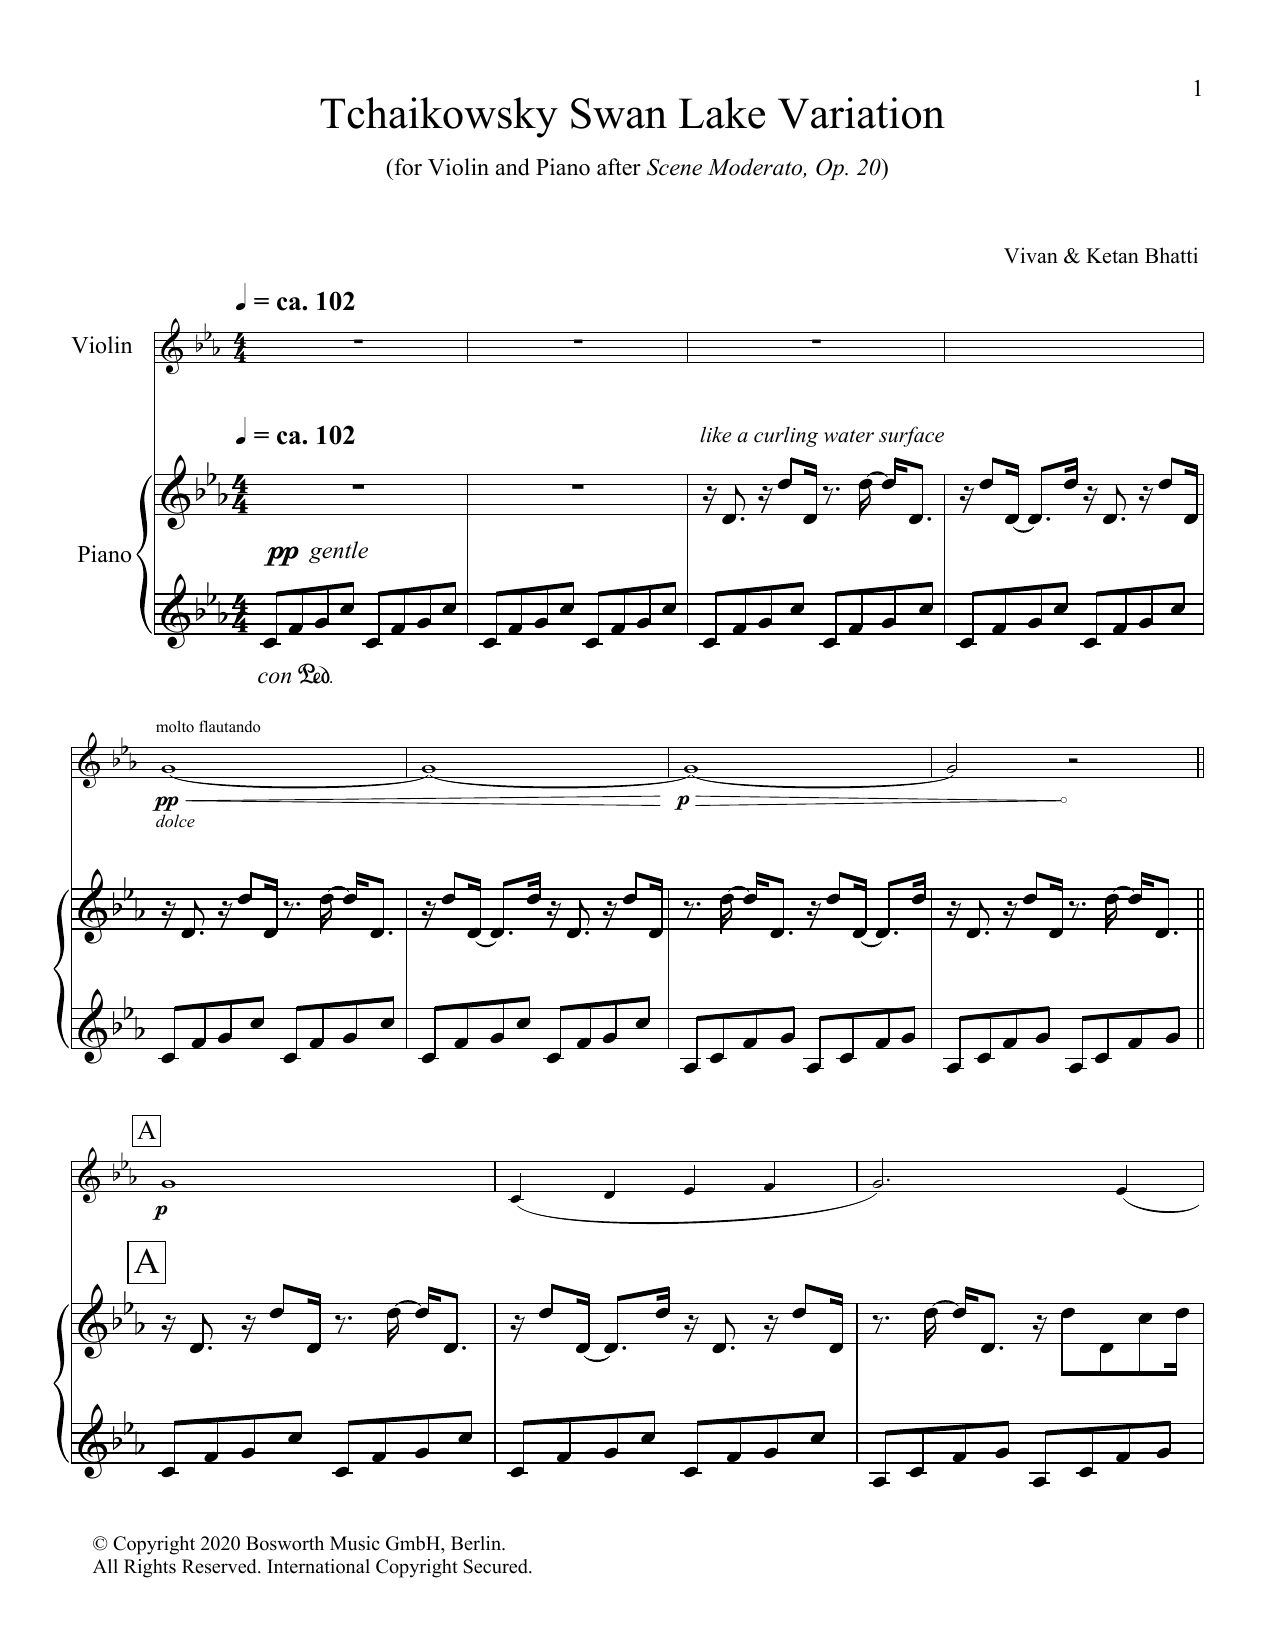 Tchaikowsky Swan Lake Variation (Violin and Piano) von Vivan & Ketan Bhatti